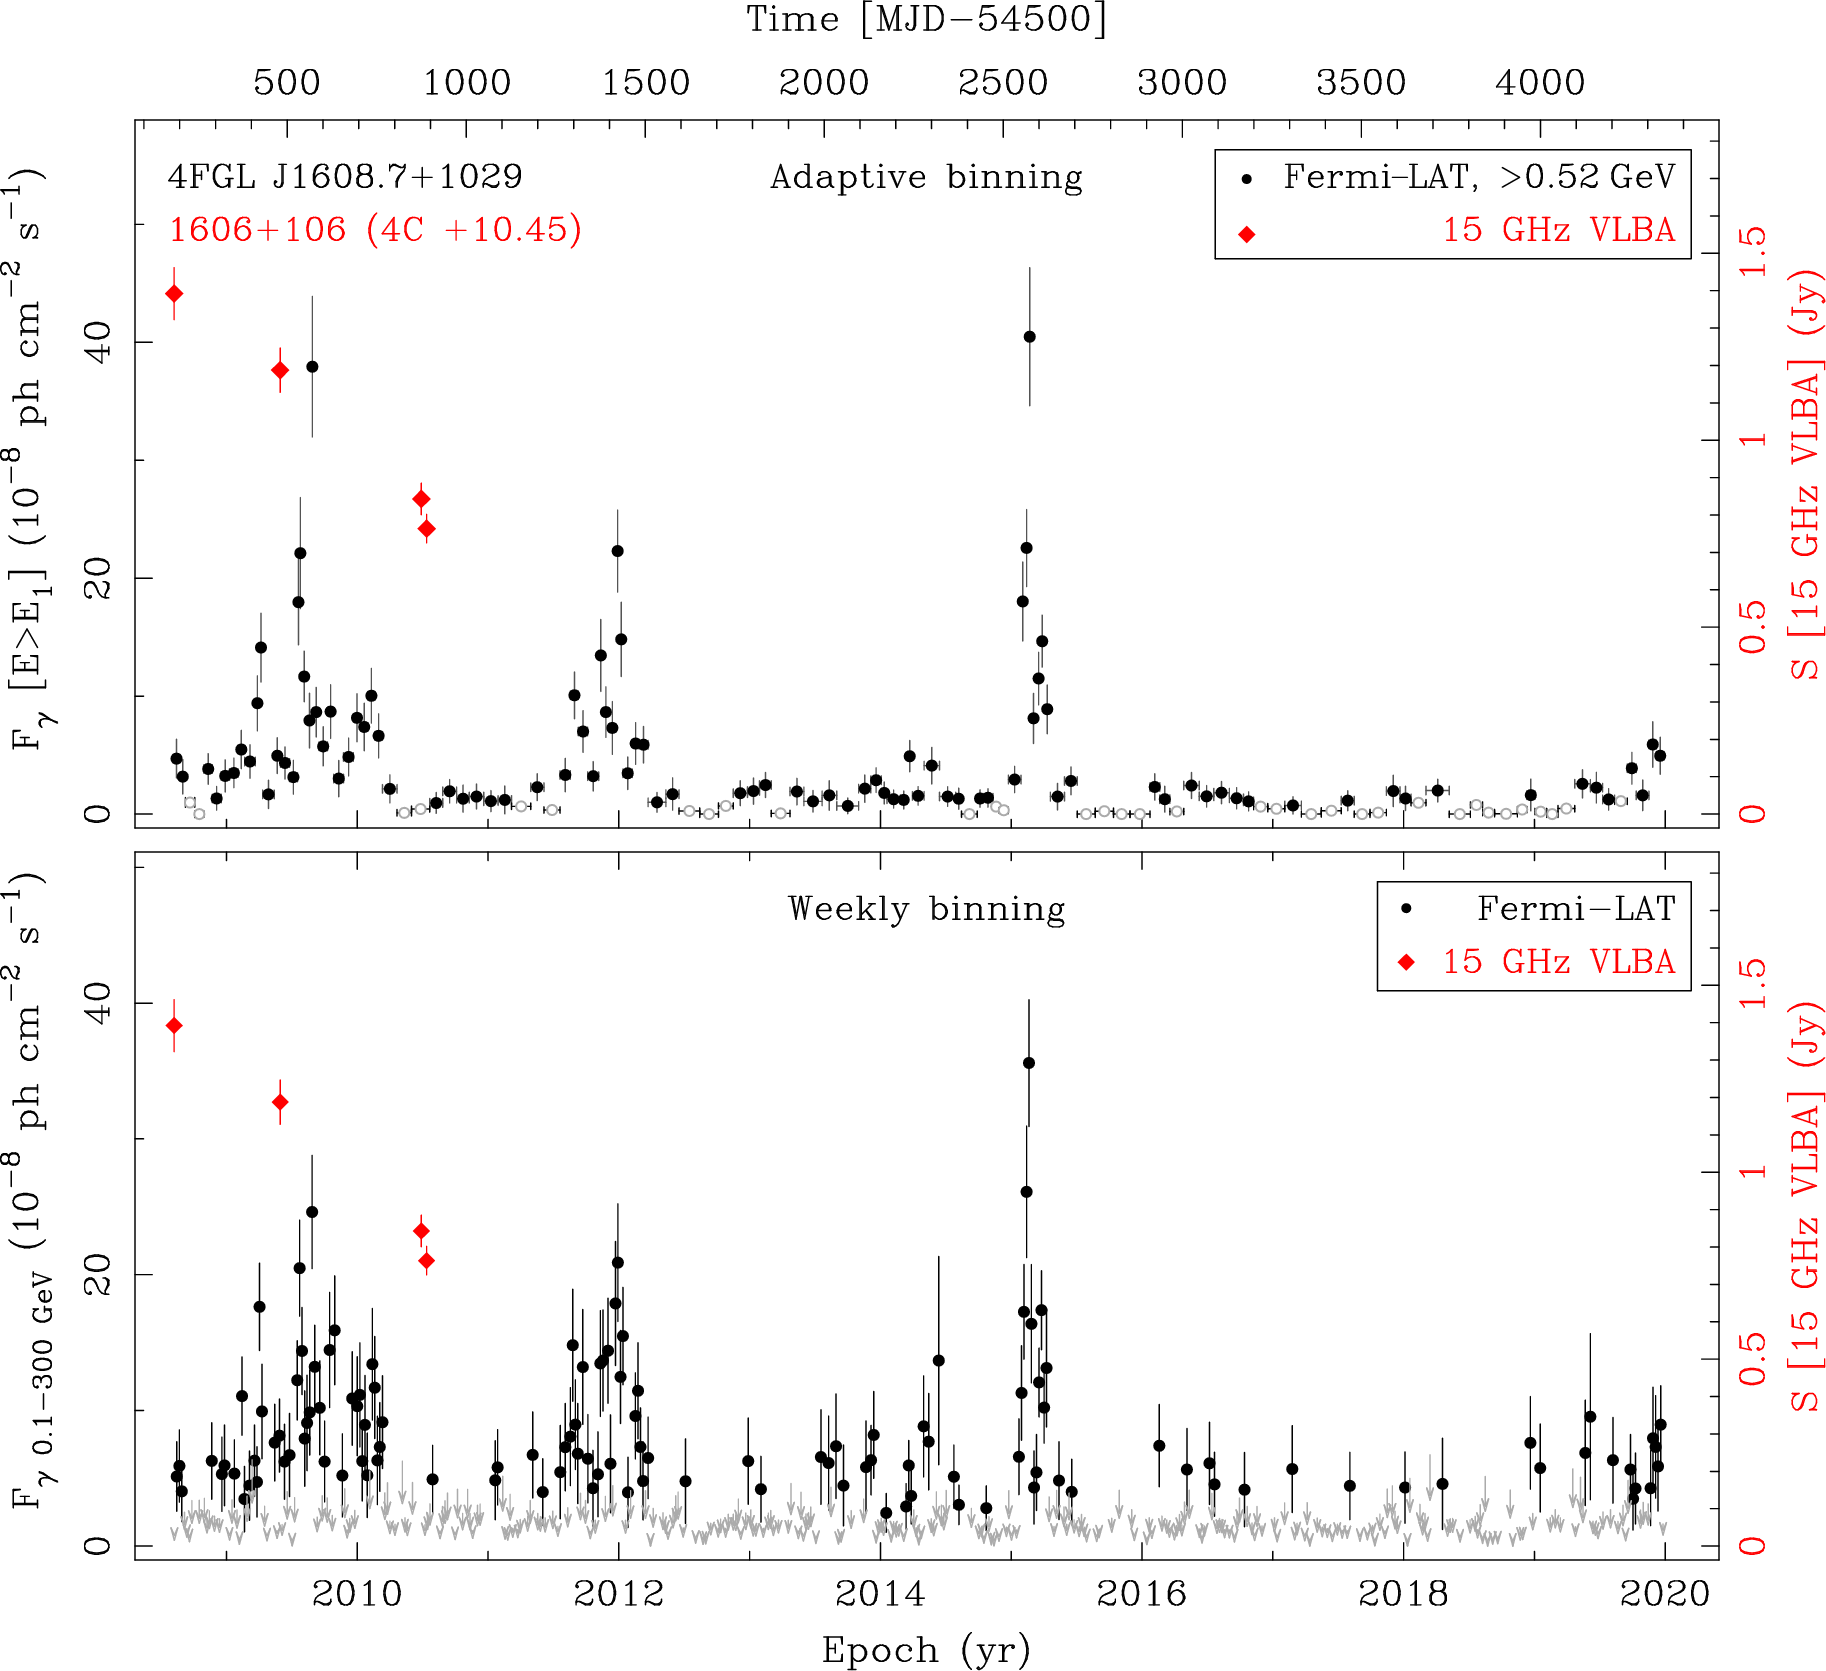 Fermi LAT and 15 GHz VLBA Light Curves